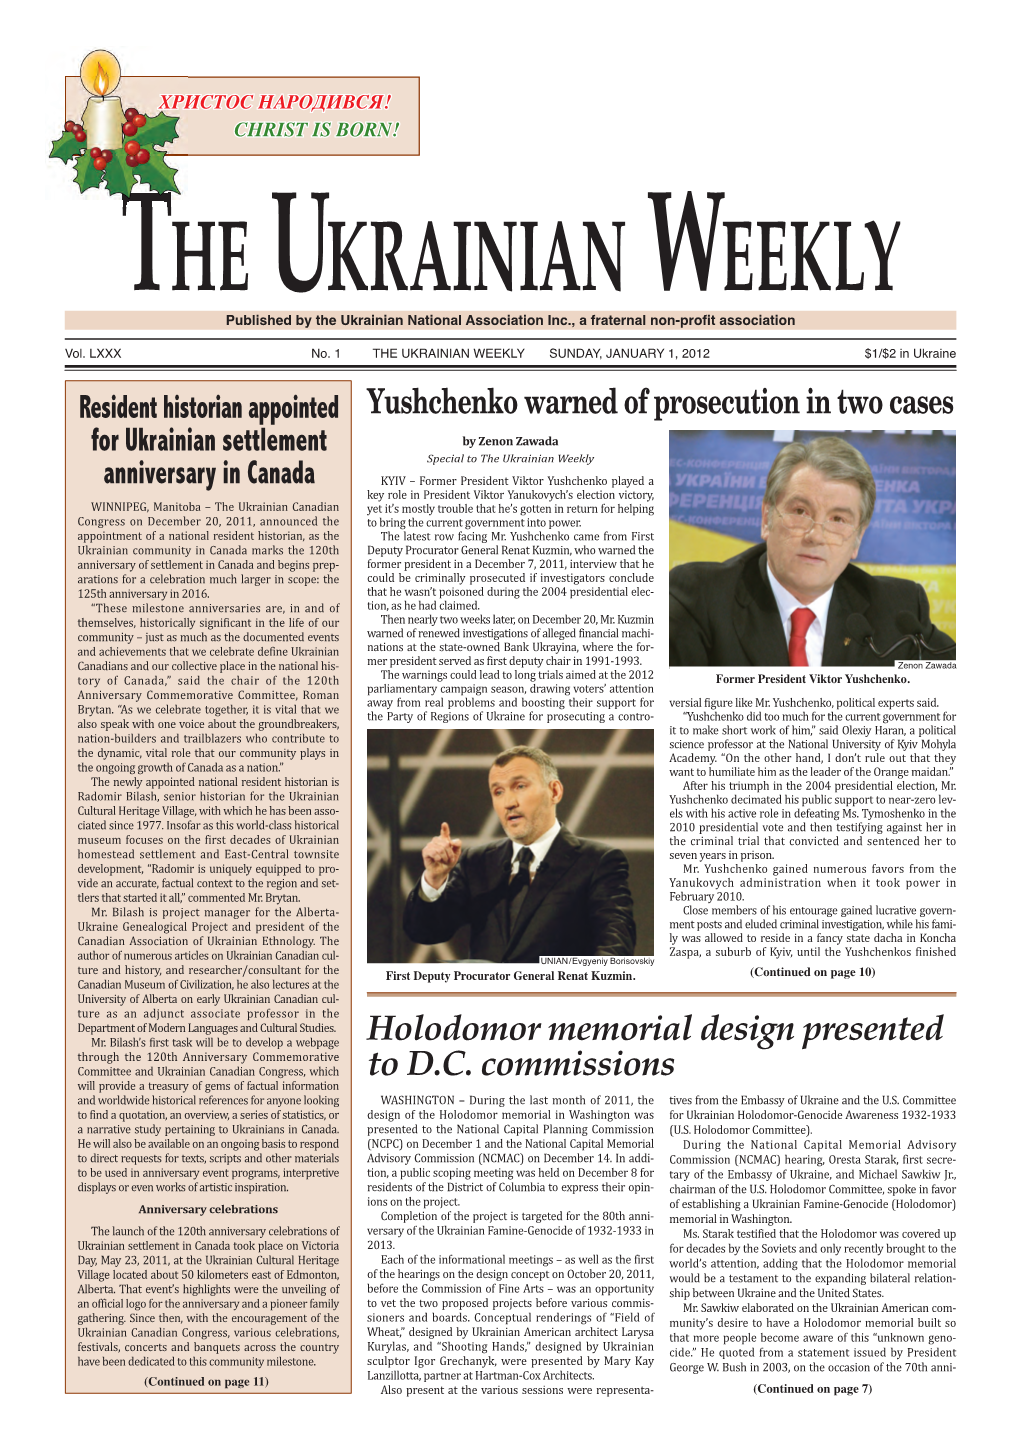 The Ukrainian Weekly 2012, No.1